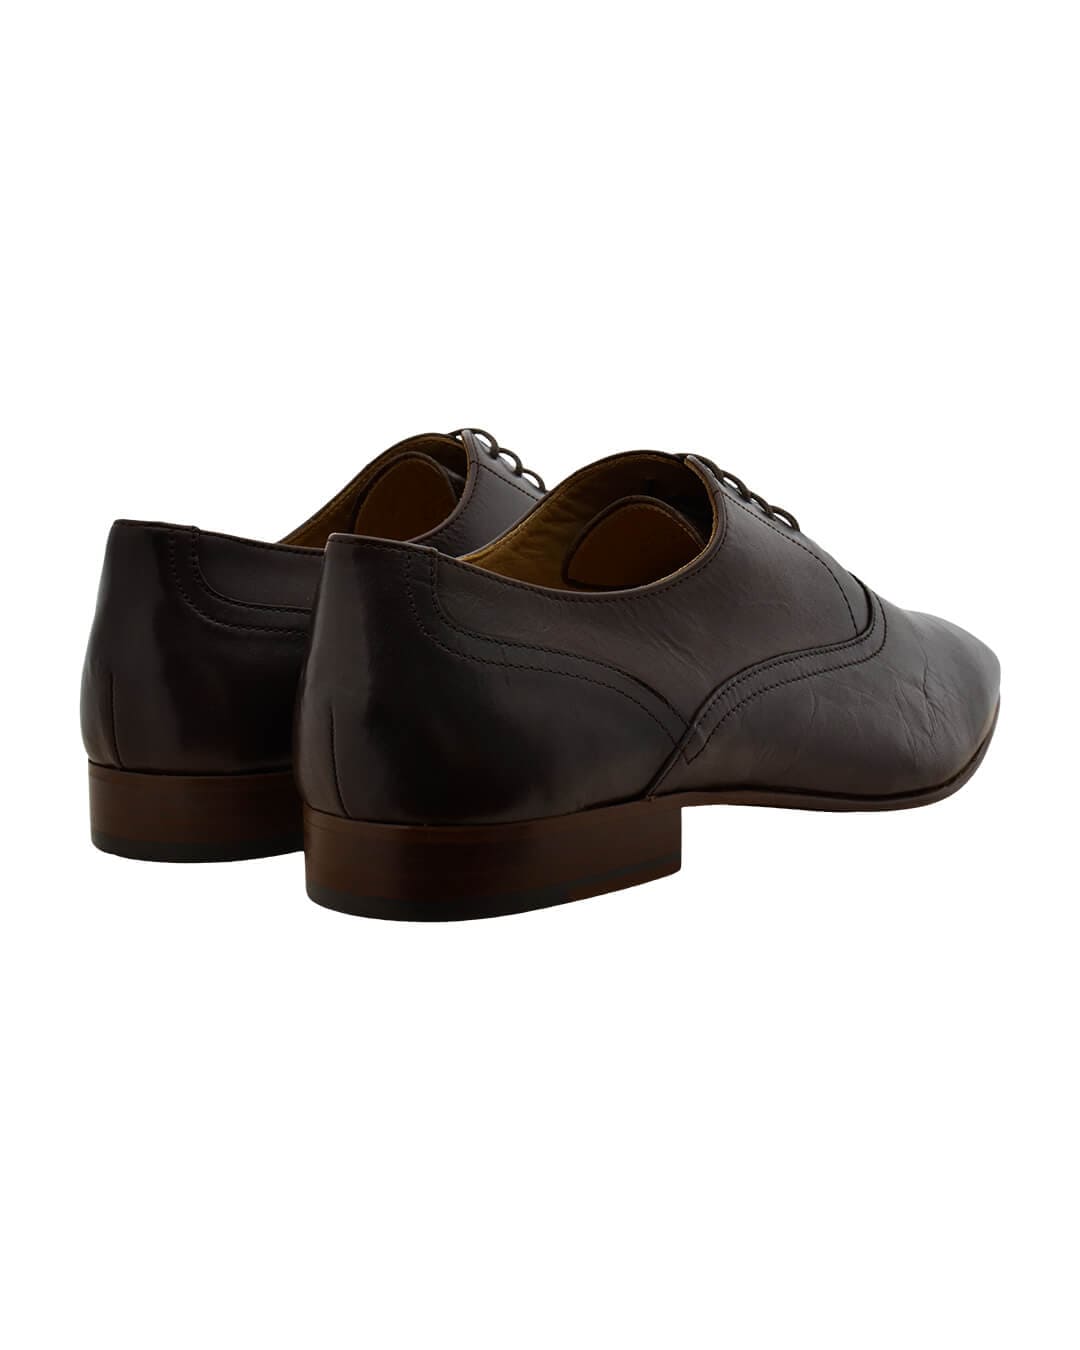 Gagliardi Shoes Gagliardi Dark Brown Leather Lace Up Shoes